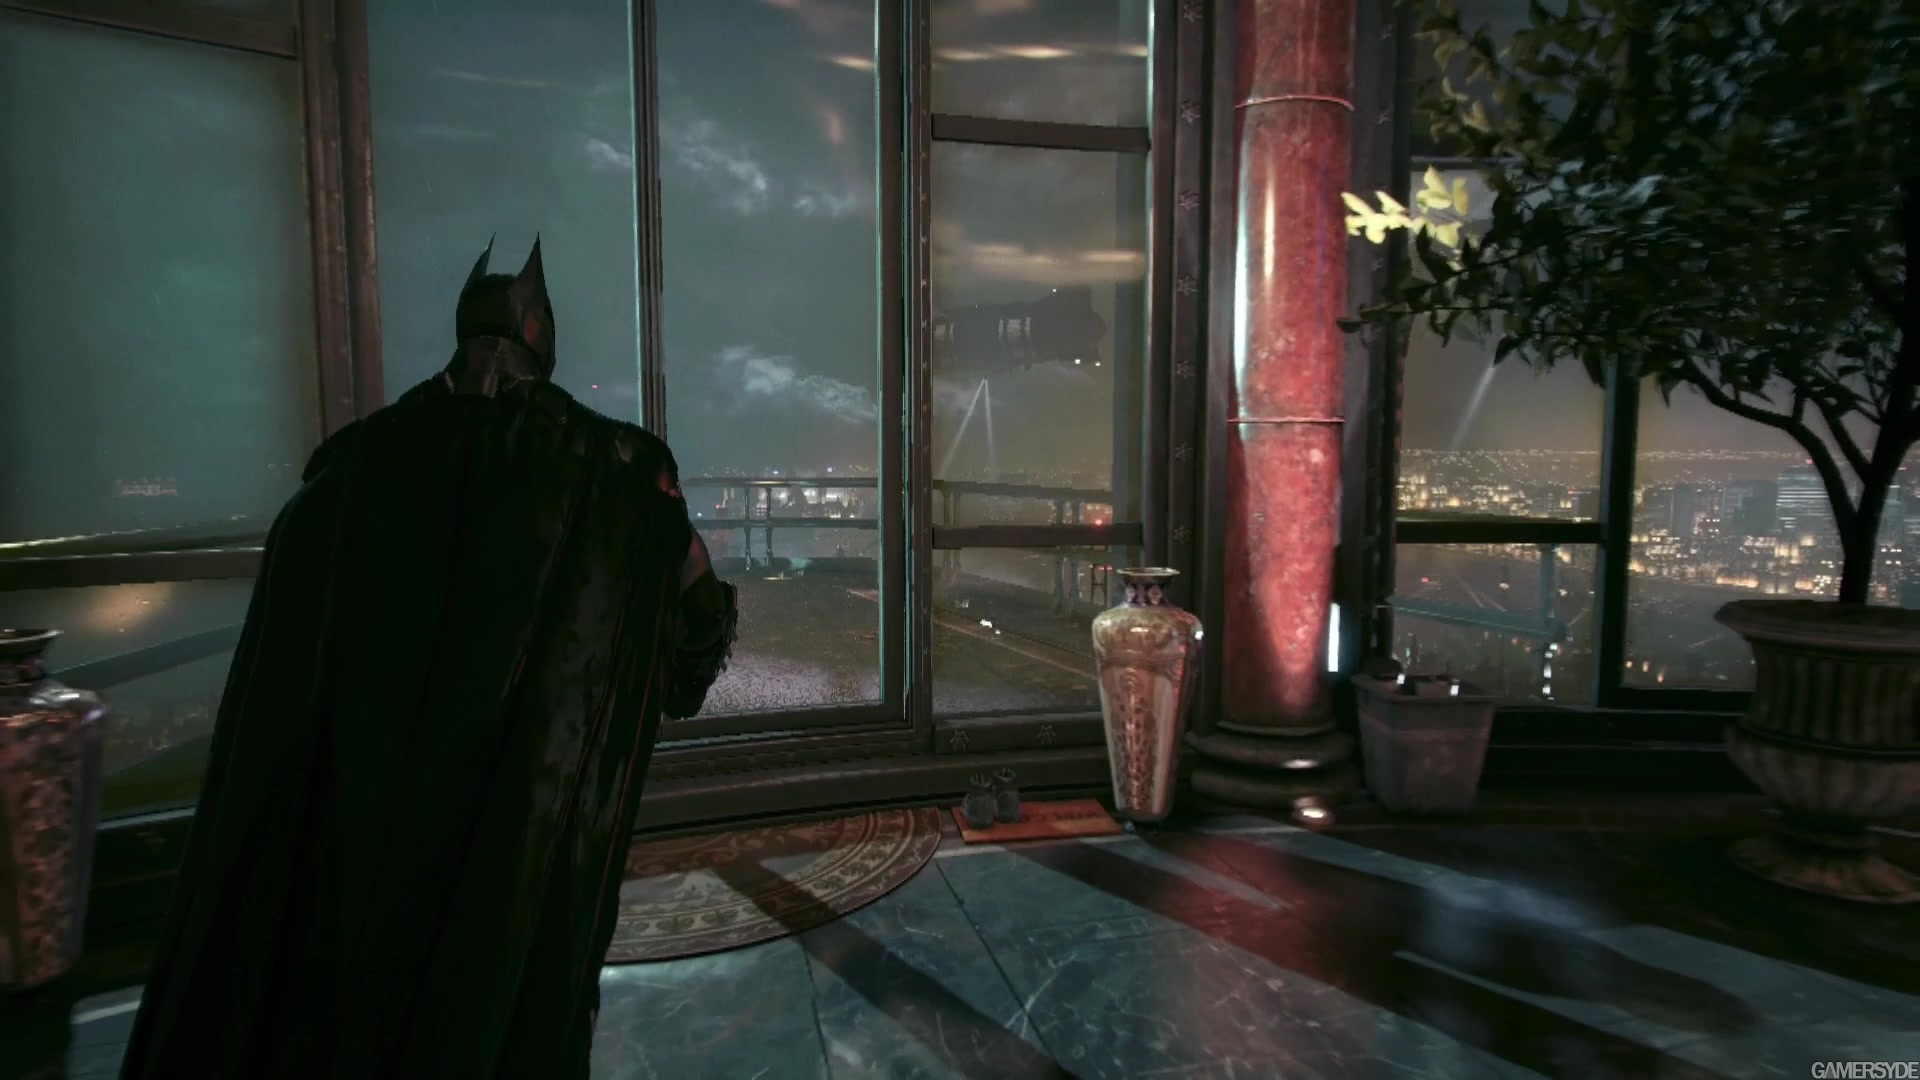 Watch five minutes of Batman: Arkham Knight gameplay